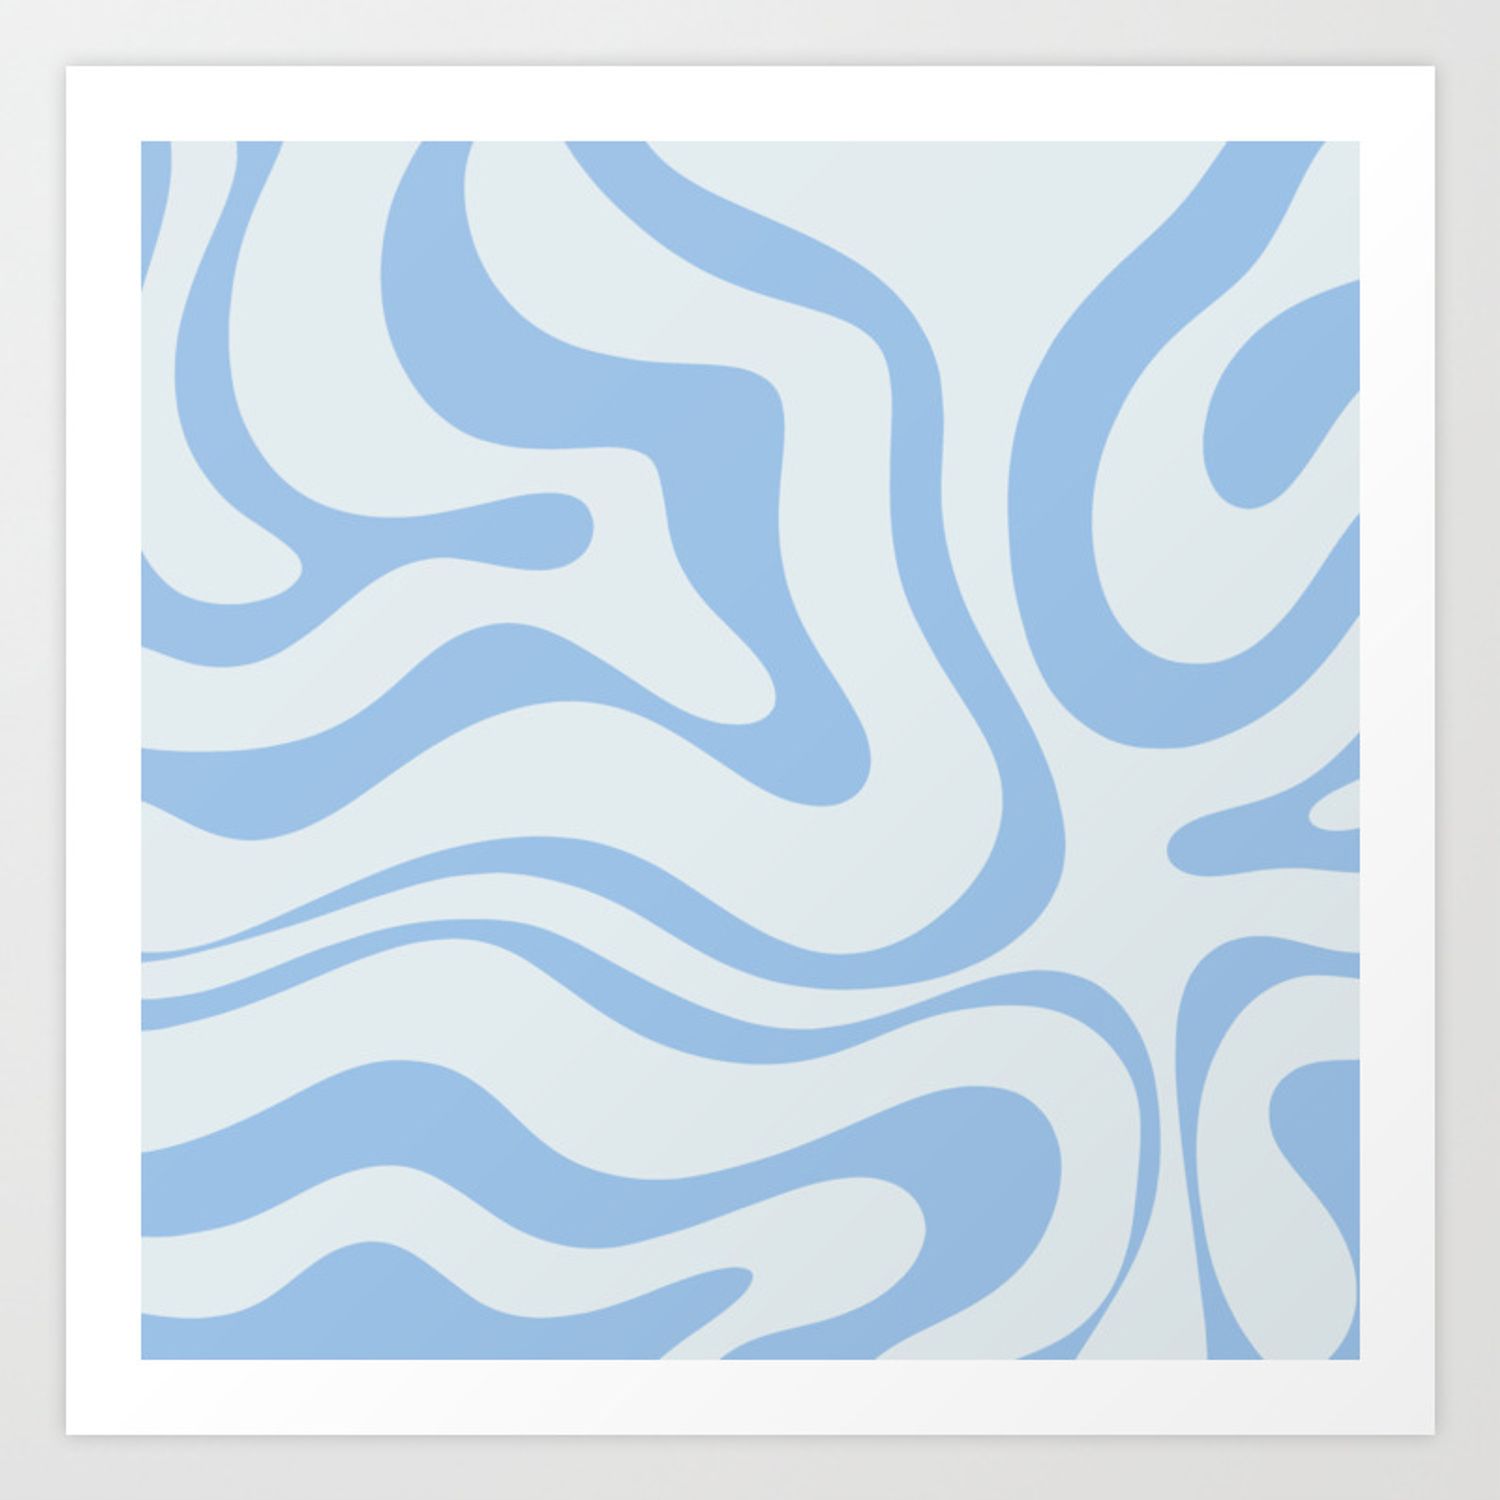 Soft Liquid Swirl Abstract Pattern Square In Powder Blue Art Print Kierkegaard Design Studio | Society6 Intended For Most Popular Liquid Swirl Wall Art (View 19 of 20)